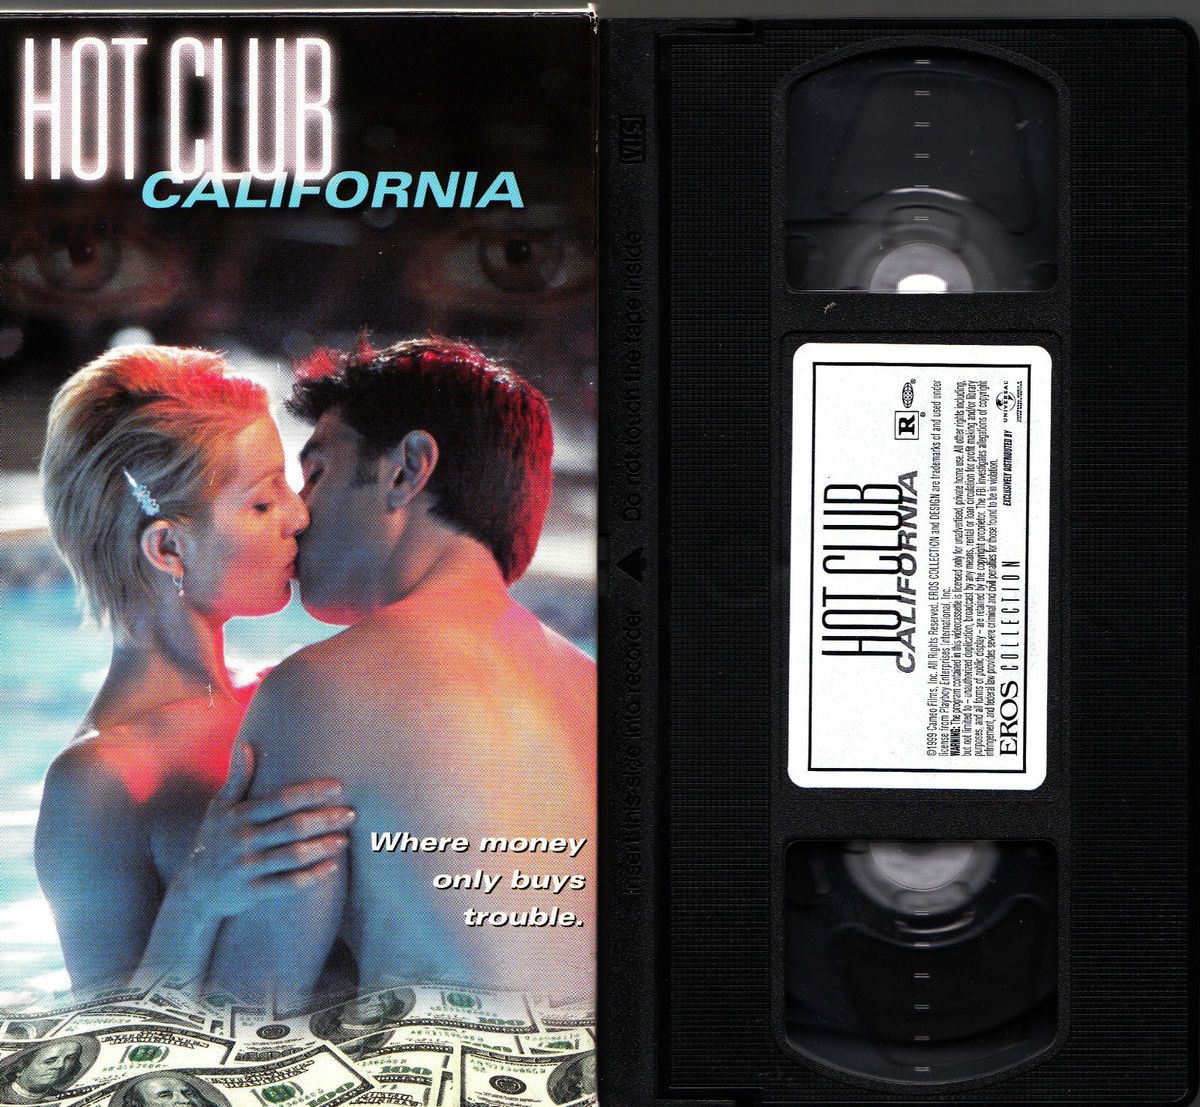   California 1999 (VHS) Angela Nicholas, Tracy Ryan and Amanda Prentice